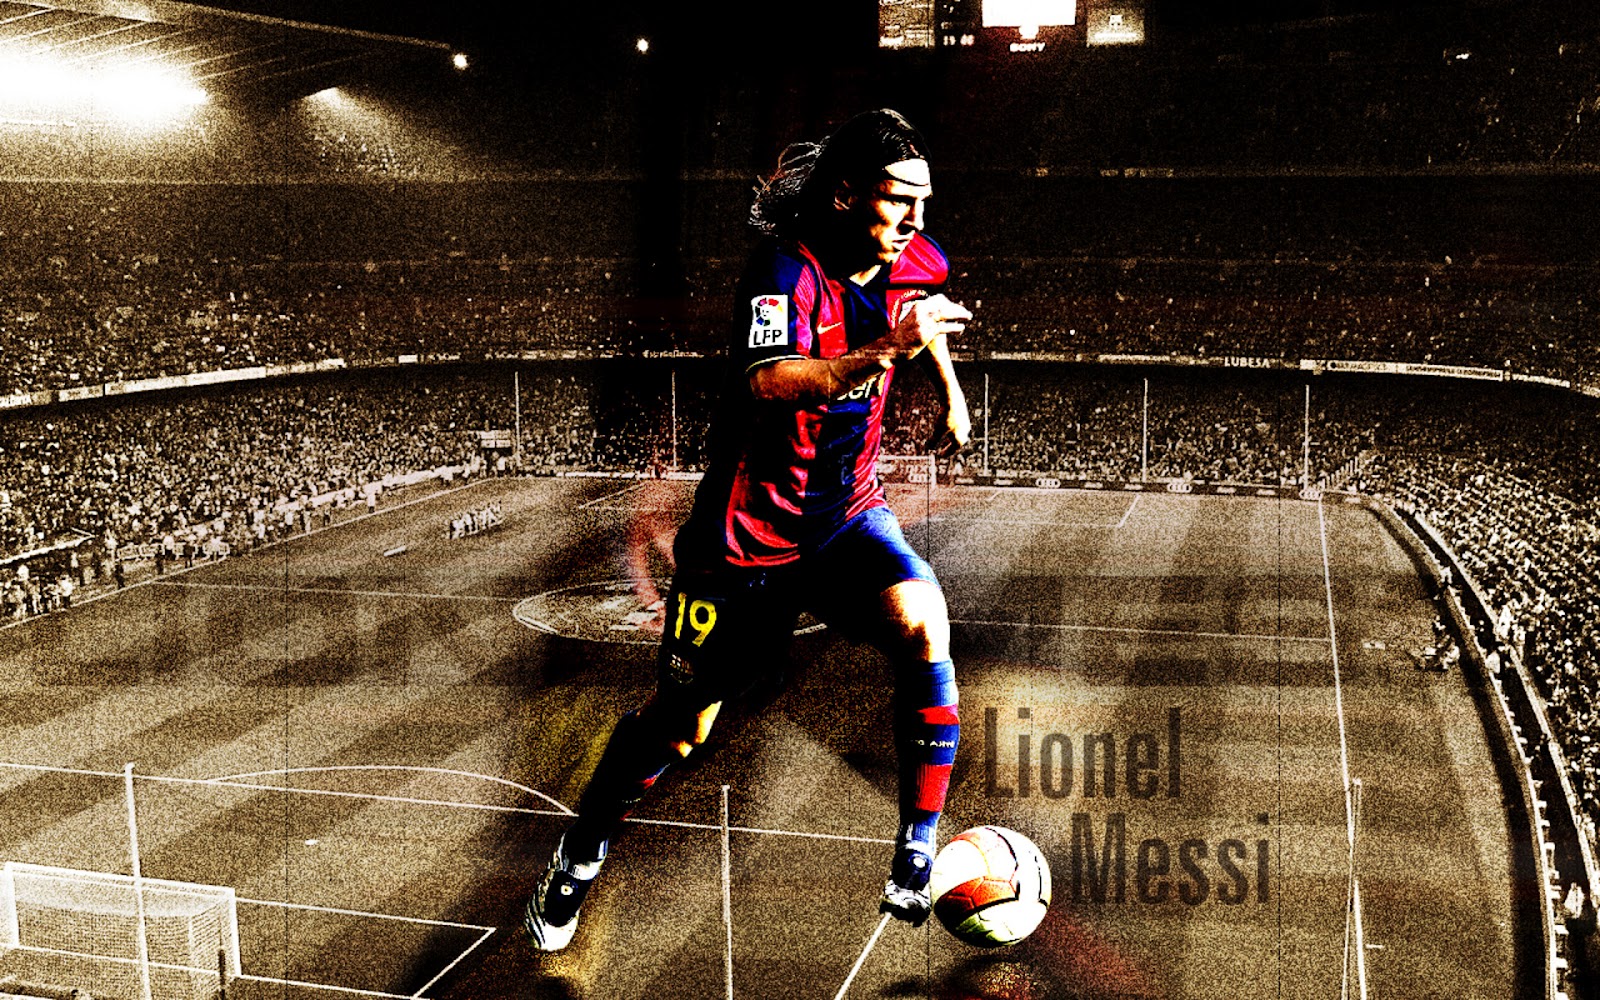 http://2.bp.blogspot.com/-v7BrmZB5FiI/T6cFR_7OYuI/AAAAAAAAJVc/k7G4h9FaryE/s1600/Lionel_Messi.jpg